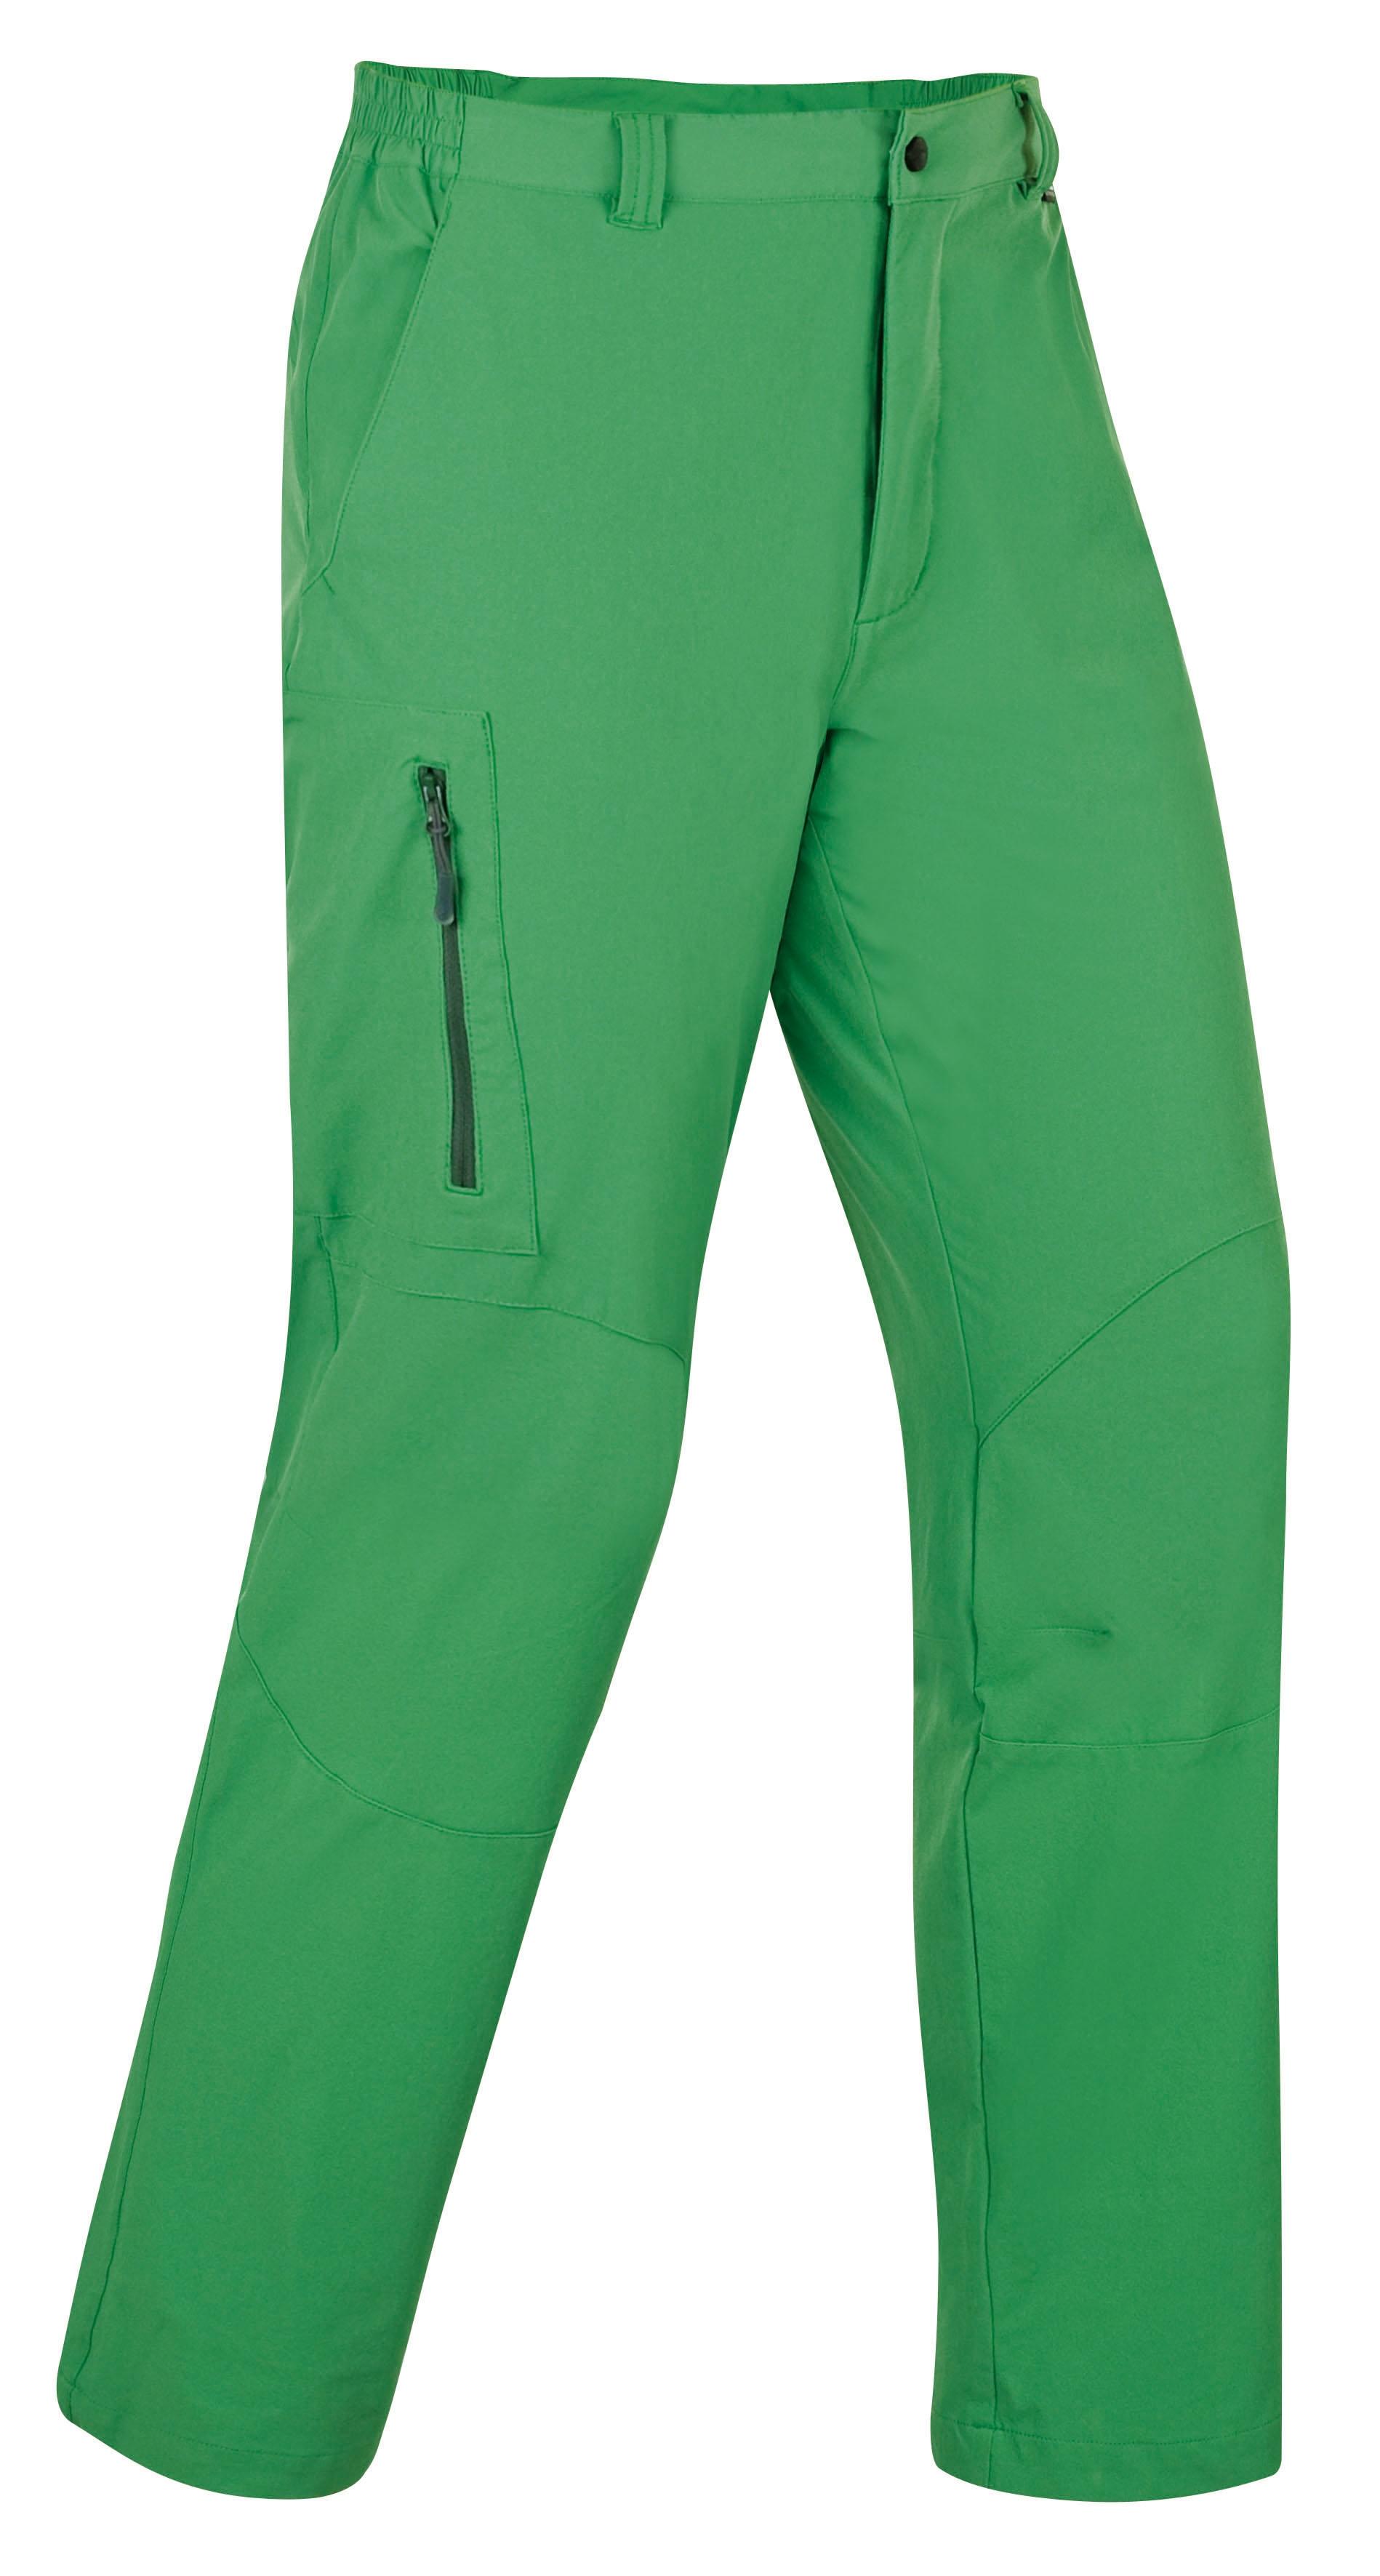 Foto Pantalones largos Salewa MITRE verde para hombre , s